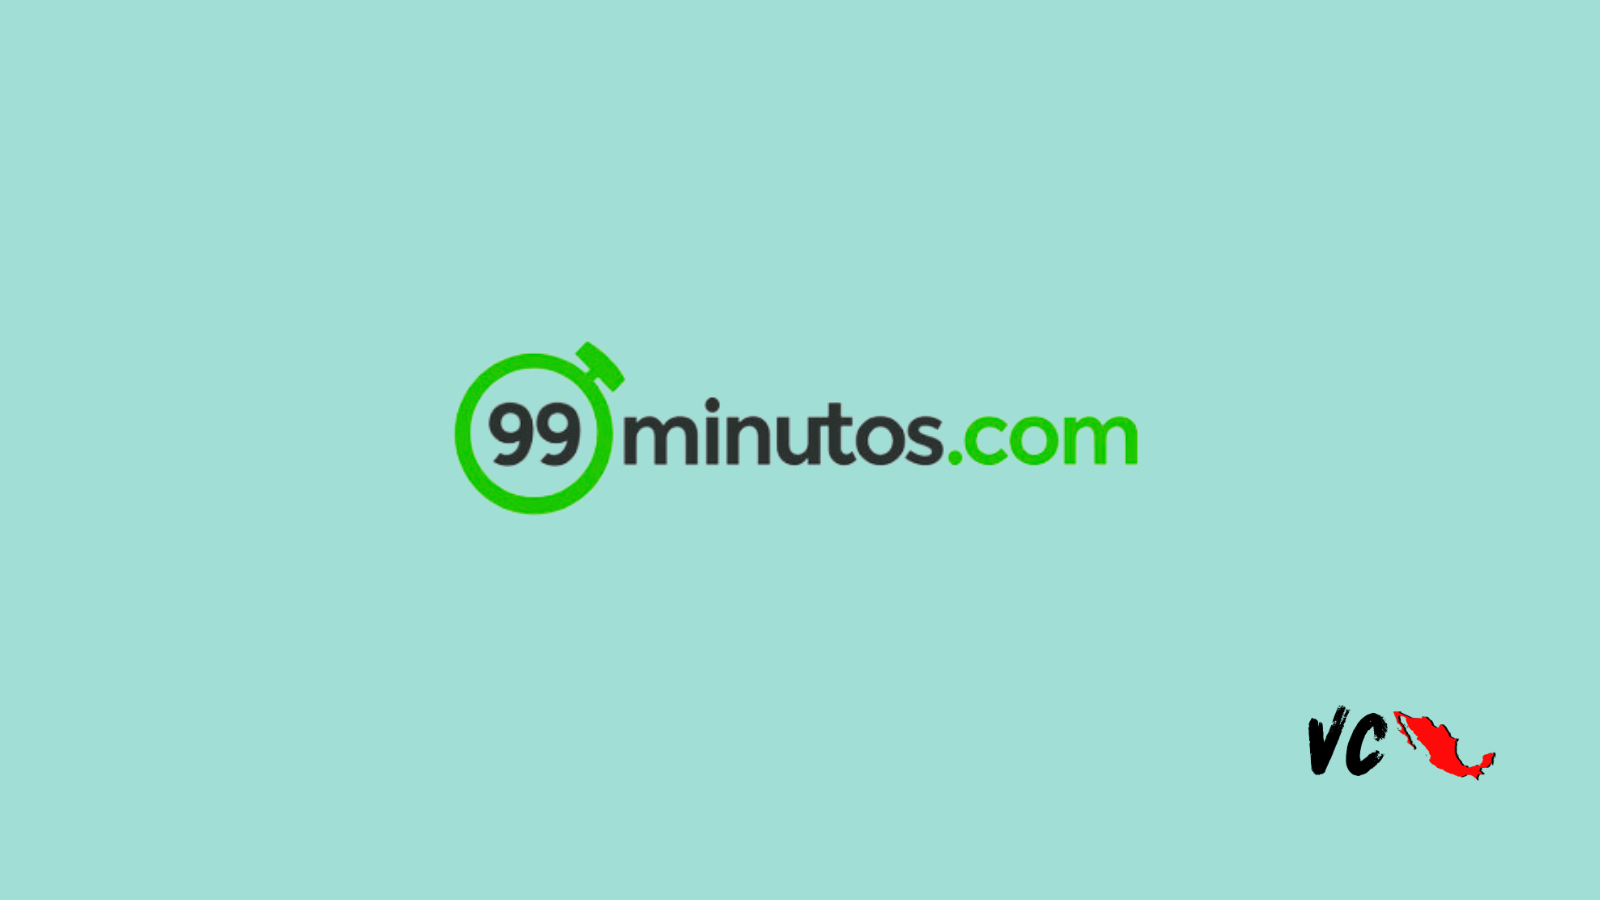 Startup Mx: 99minutos